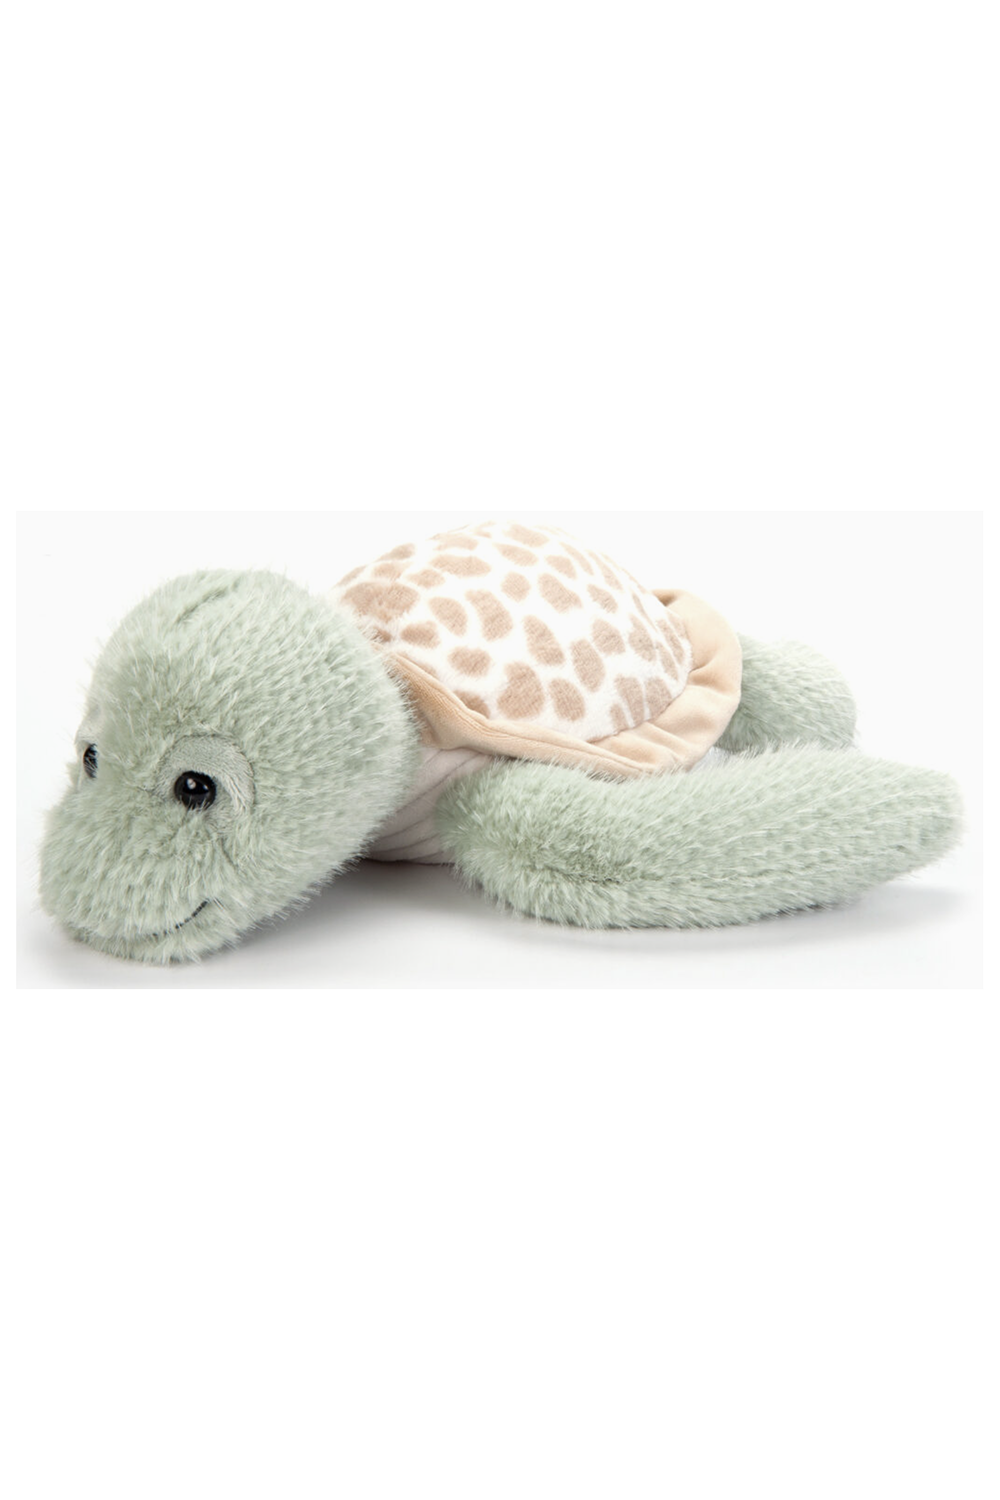 Sea Fuzzlez Sea Turtle Stuffed Animal